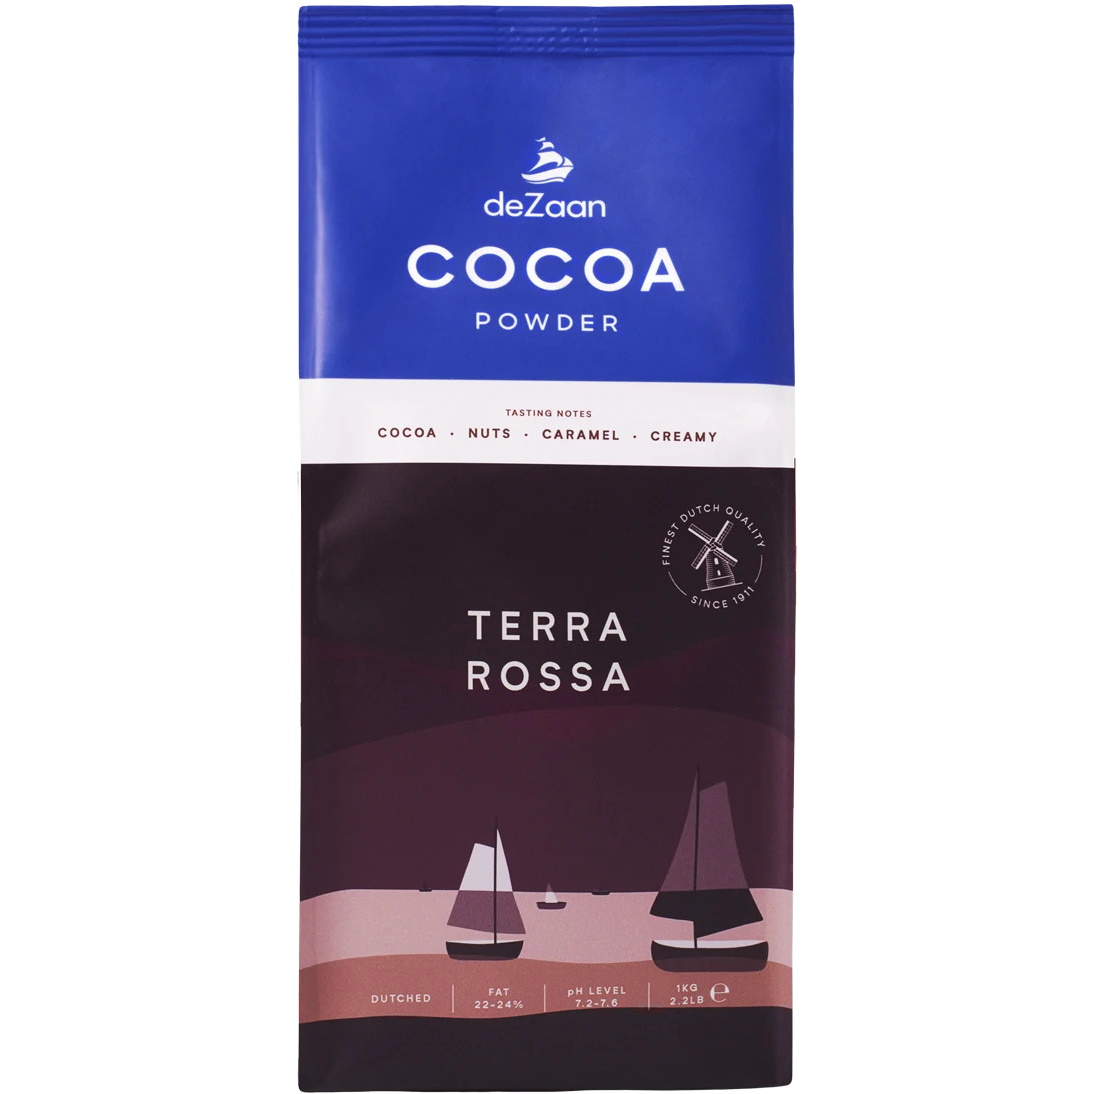 deZaan Holland Terra Rossa Cocoa Powder